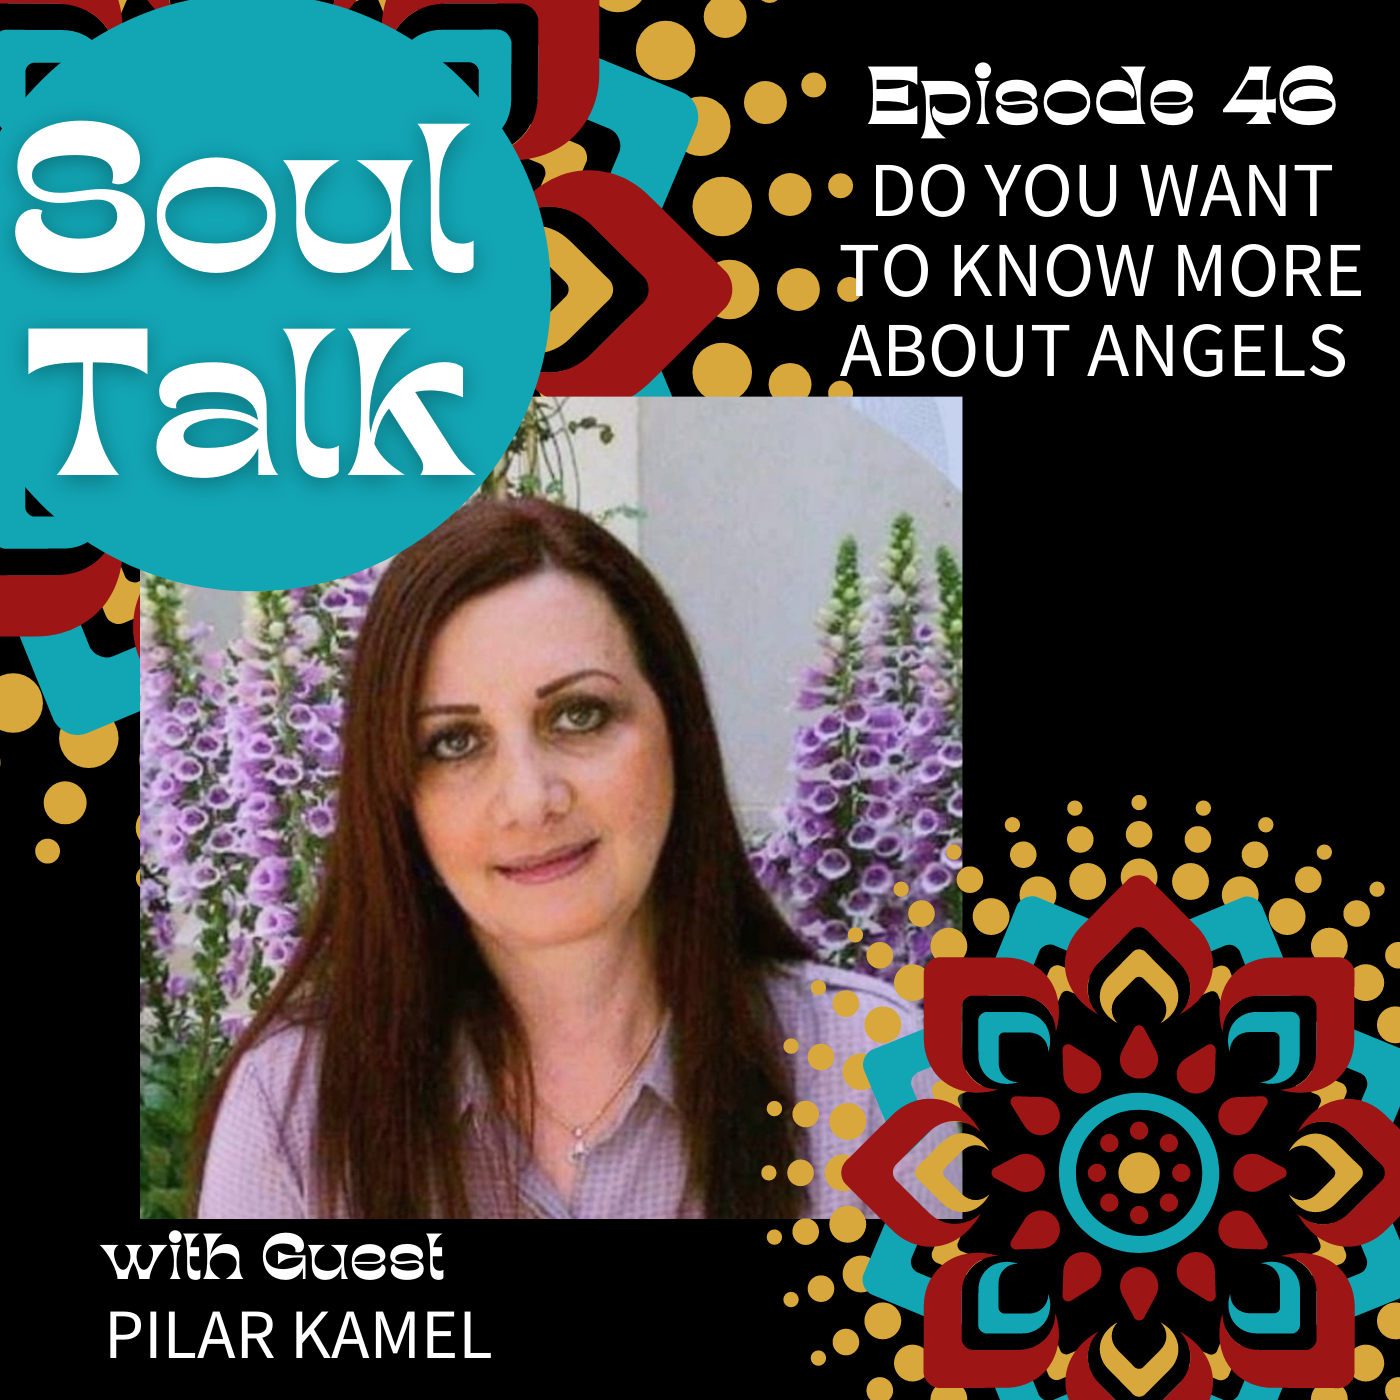 Artwork for podcast Soul Talk with Monica Ramirez